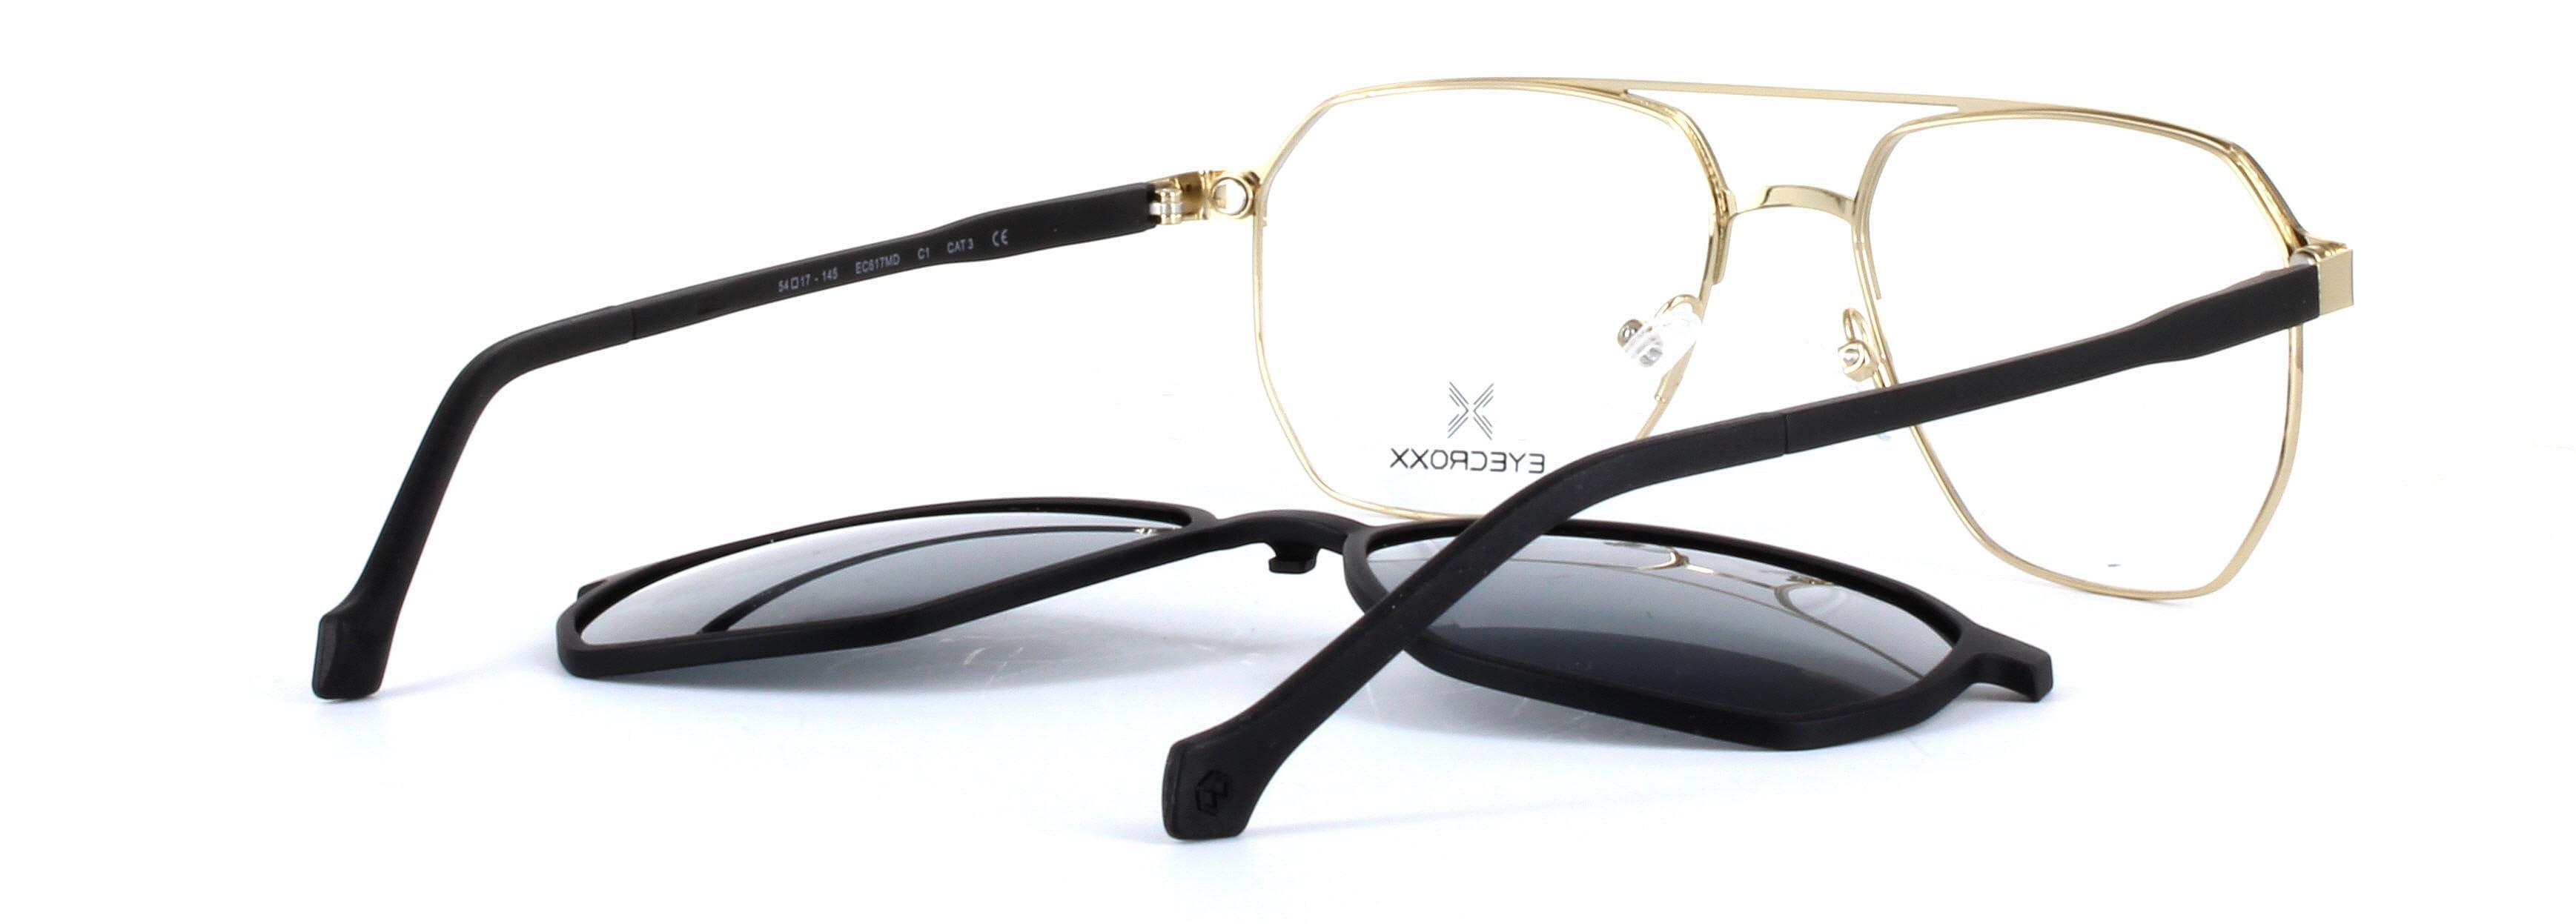 Eyecroxx 617 Black Full Rim Aviator Metal Glasses - Image View 4